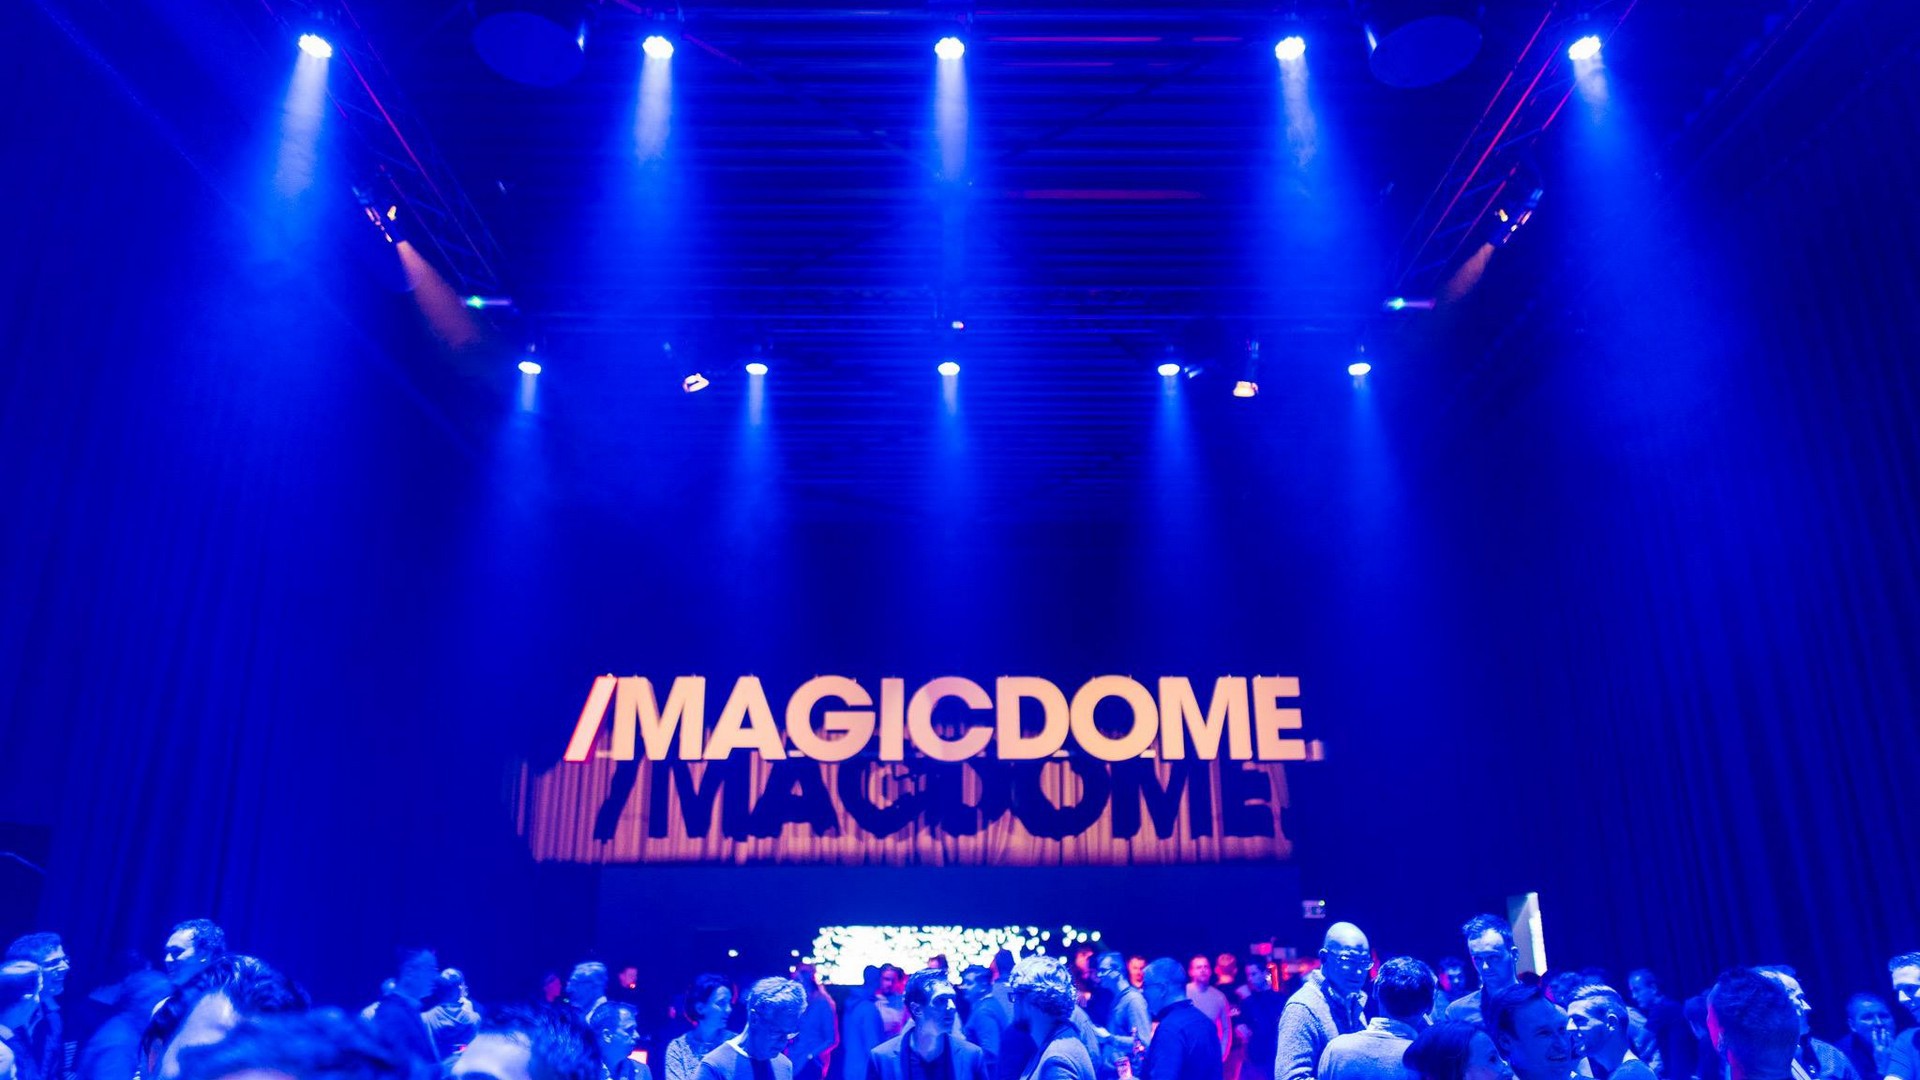 Magicdome Magic FX